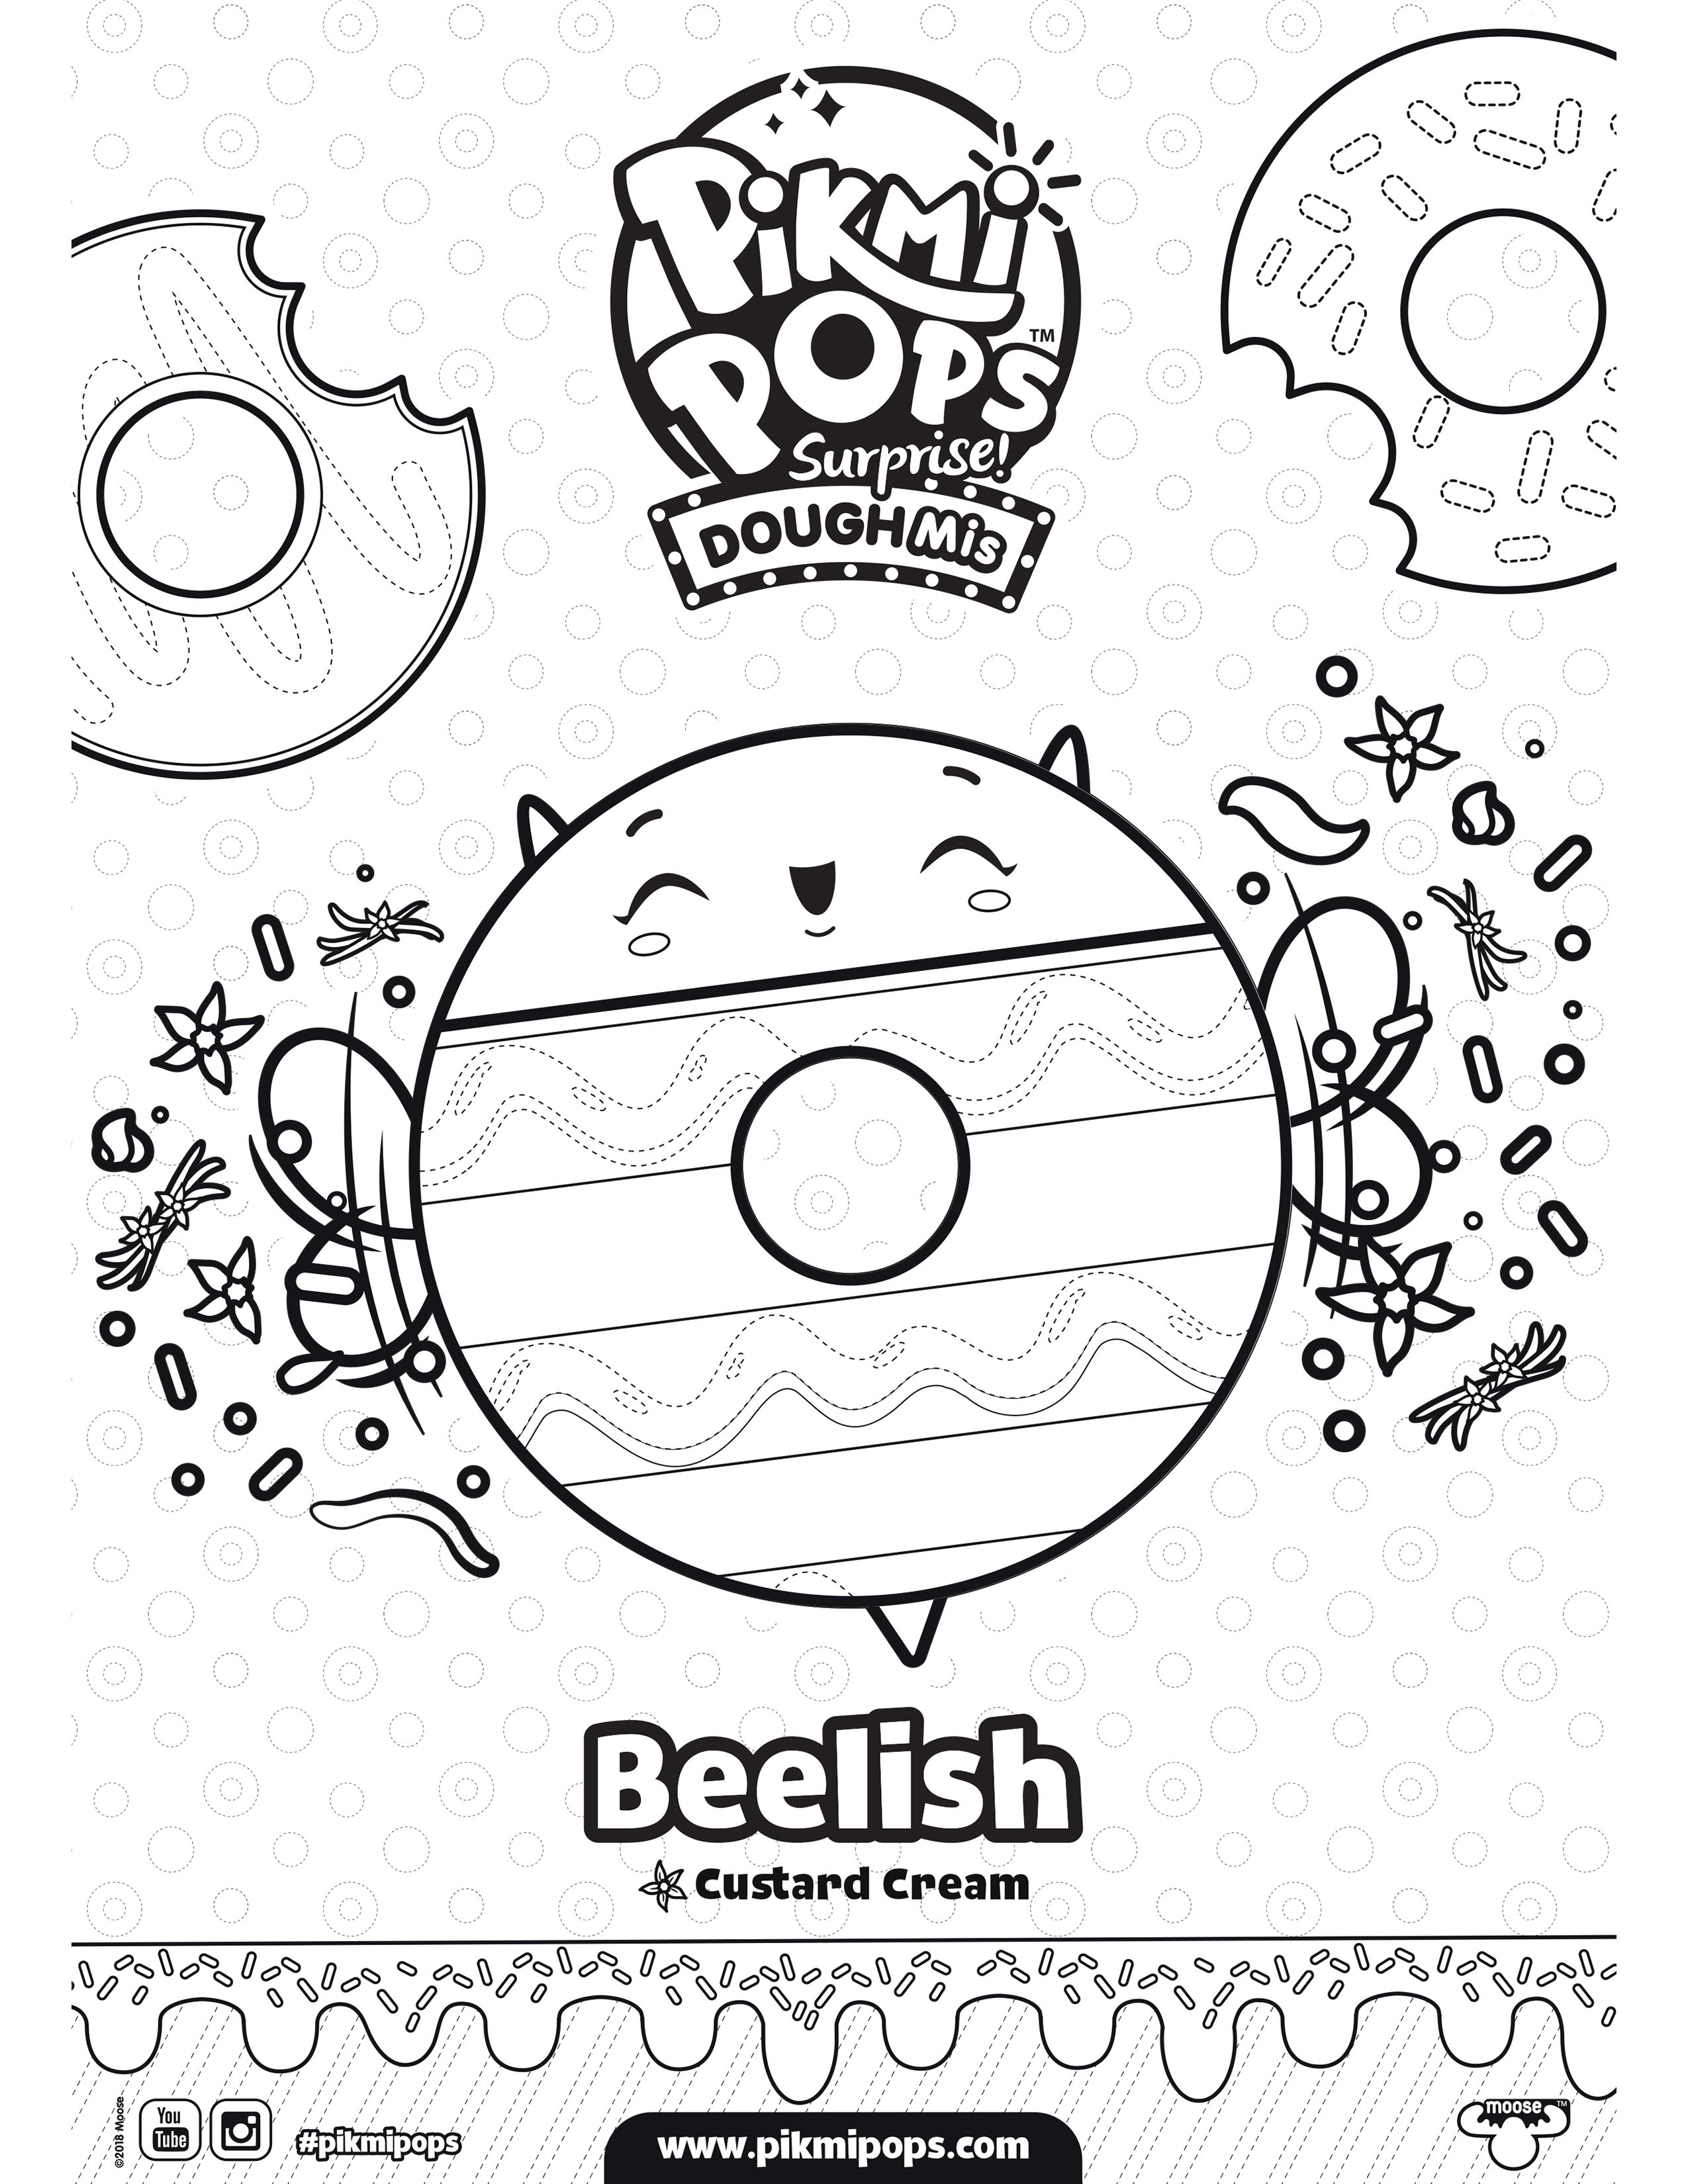 pikmi-pops-surprise-season-4-dough-mis-coloring-sheet-beelish – Kids Time